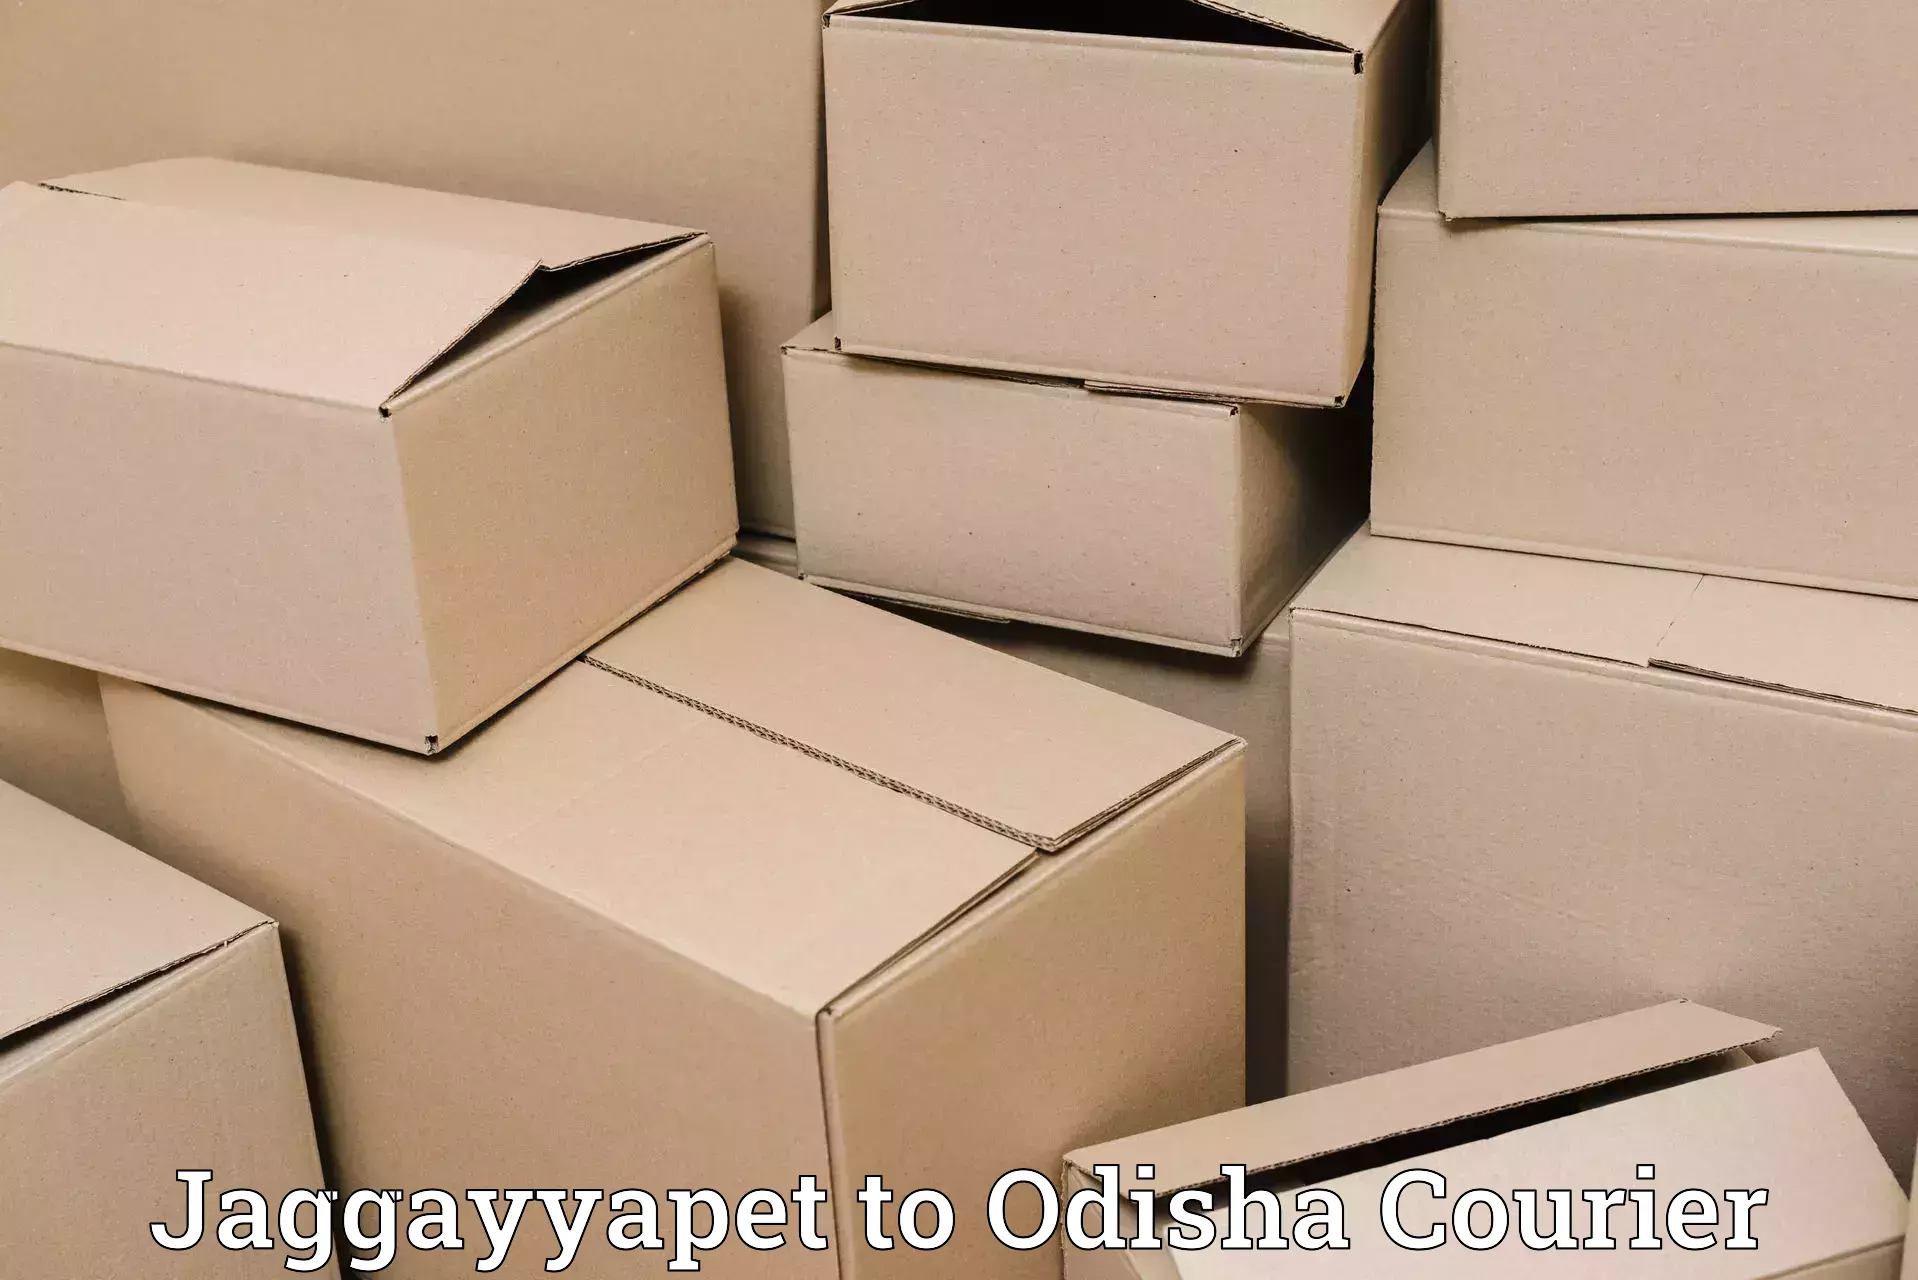 Digital courier platforms Jaggayyapet to Odisha